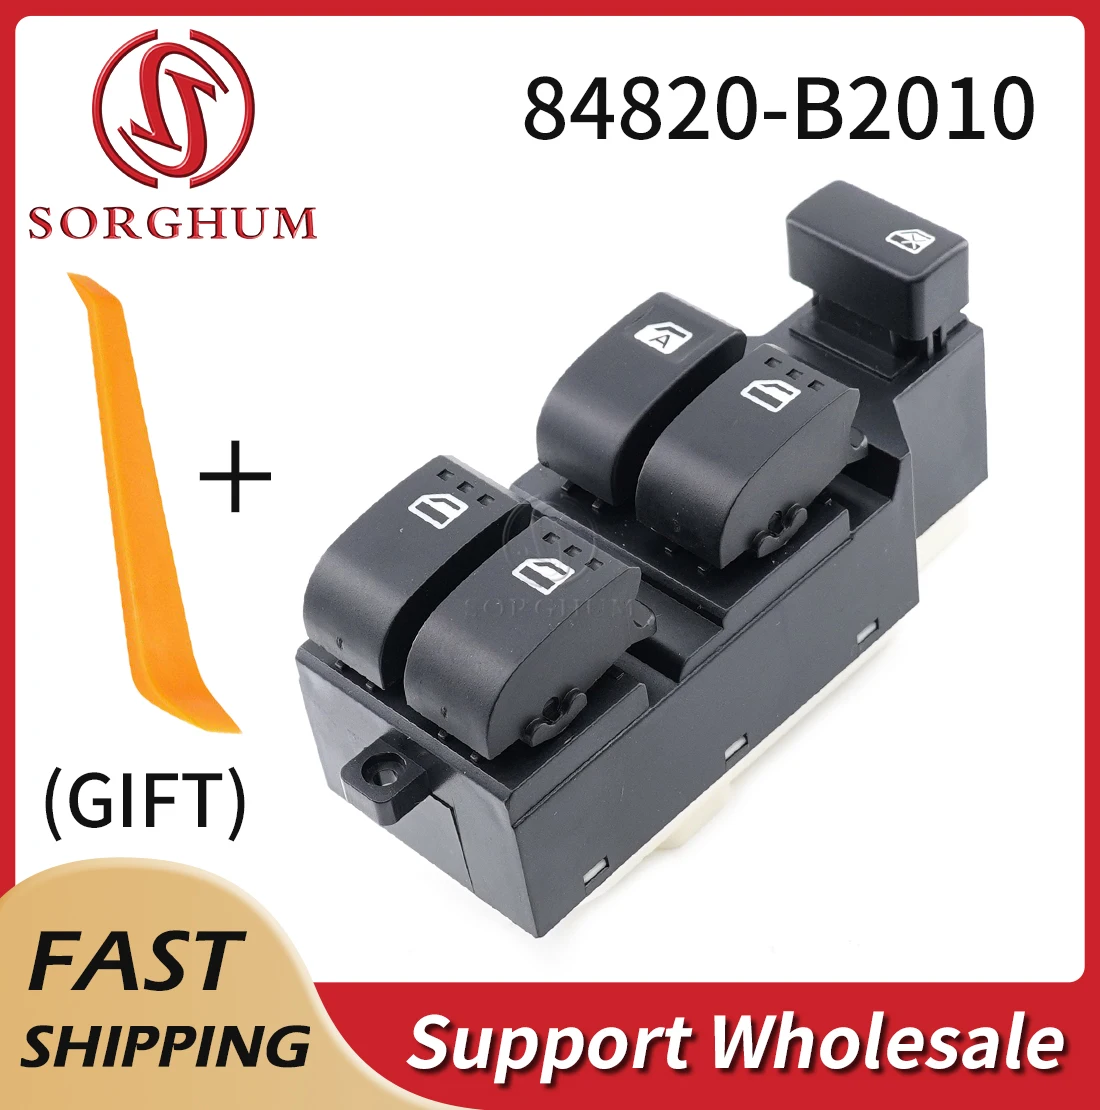 

Sorghum 84820-B2010 Front LHD Left Side Power Window Control Switch Button For Toyota Daihatsu Sirion Avanza BB Rush 84820-B2320